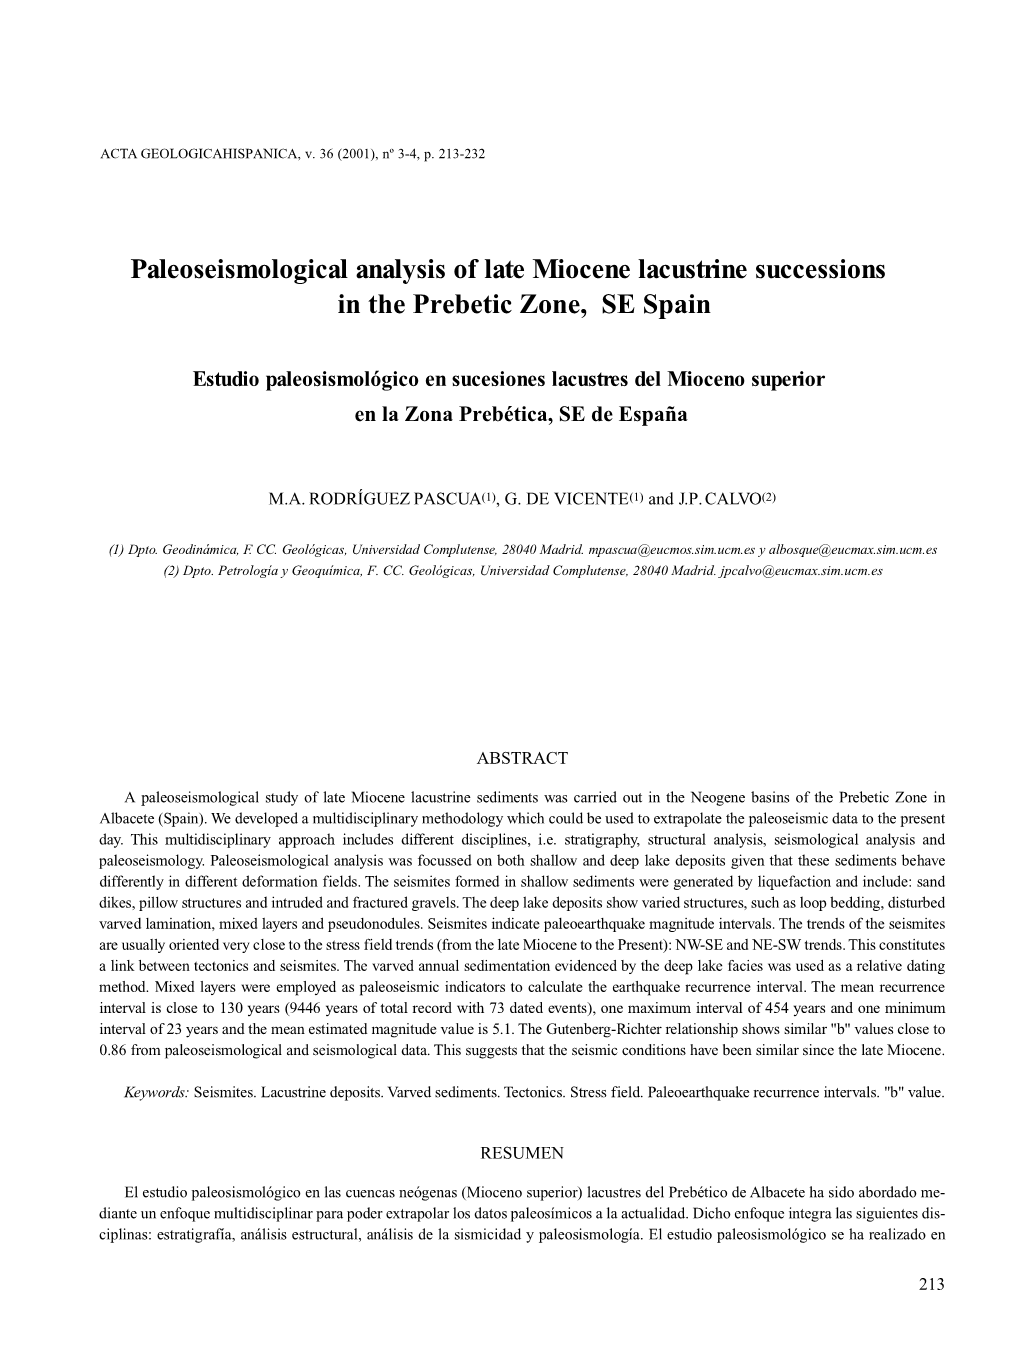 Paleoseismological Analysis of Late Miocene Lacustrine Successions in the Prebetic Zone, SE Spain